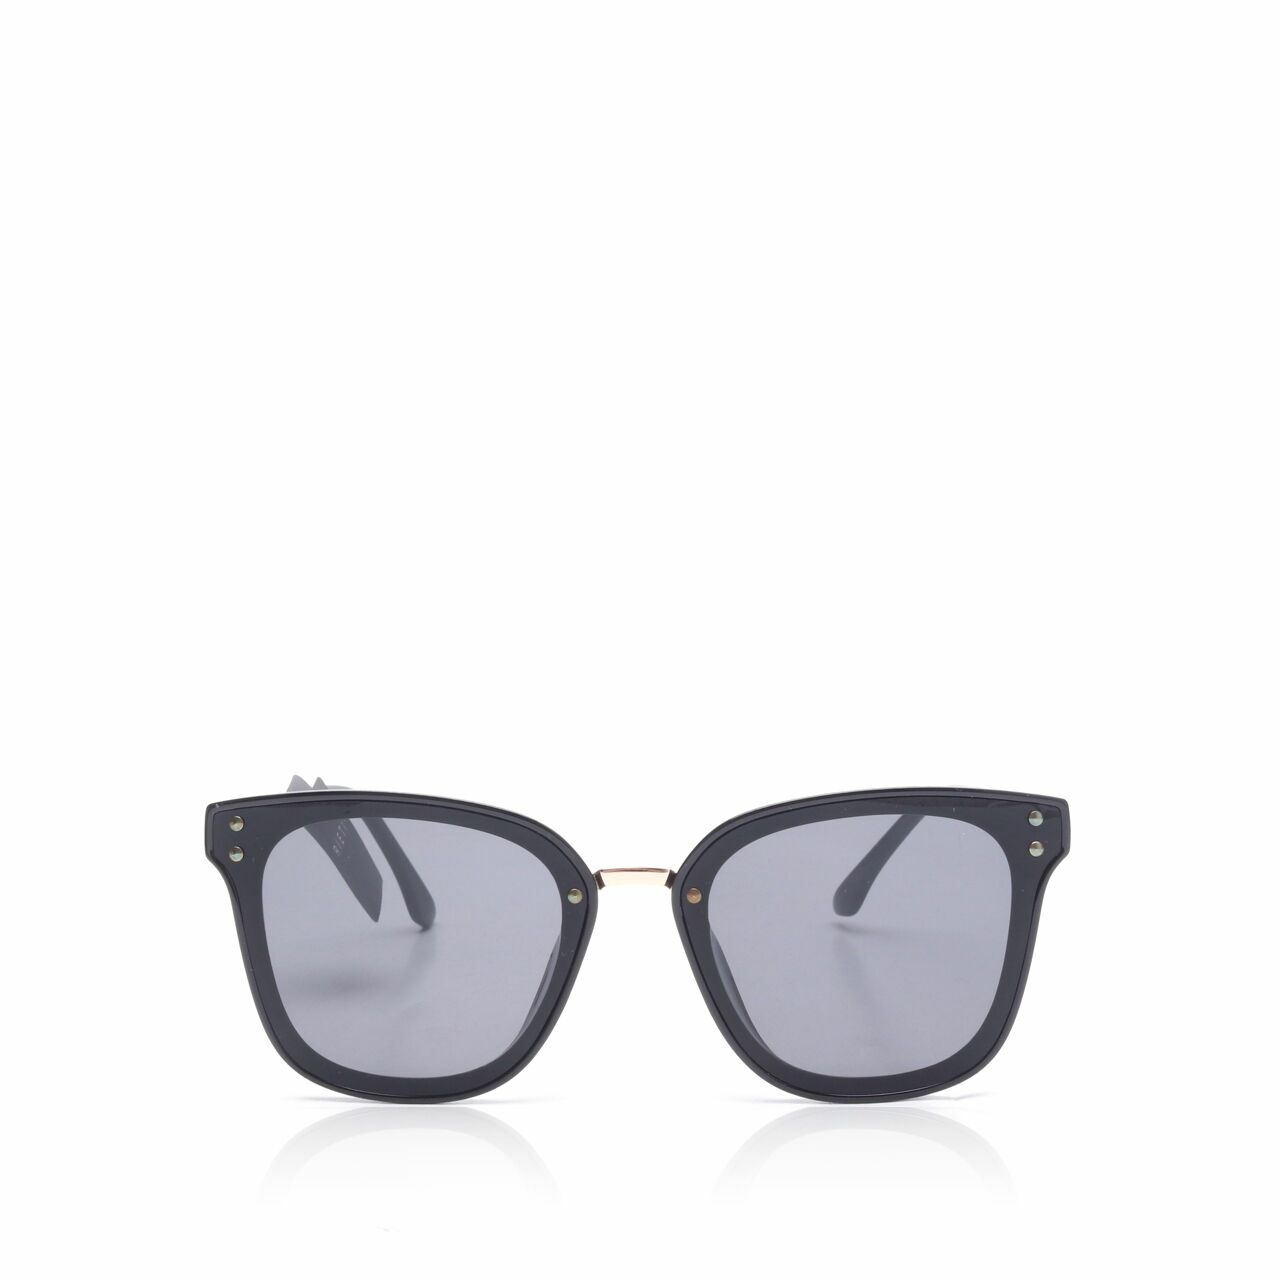 Rieti Doris 01-1 Black Sunglasses